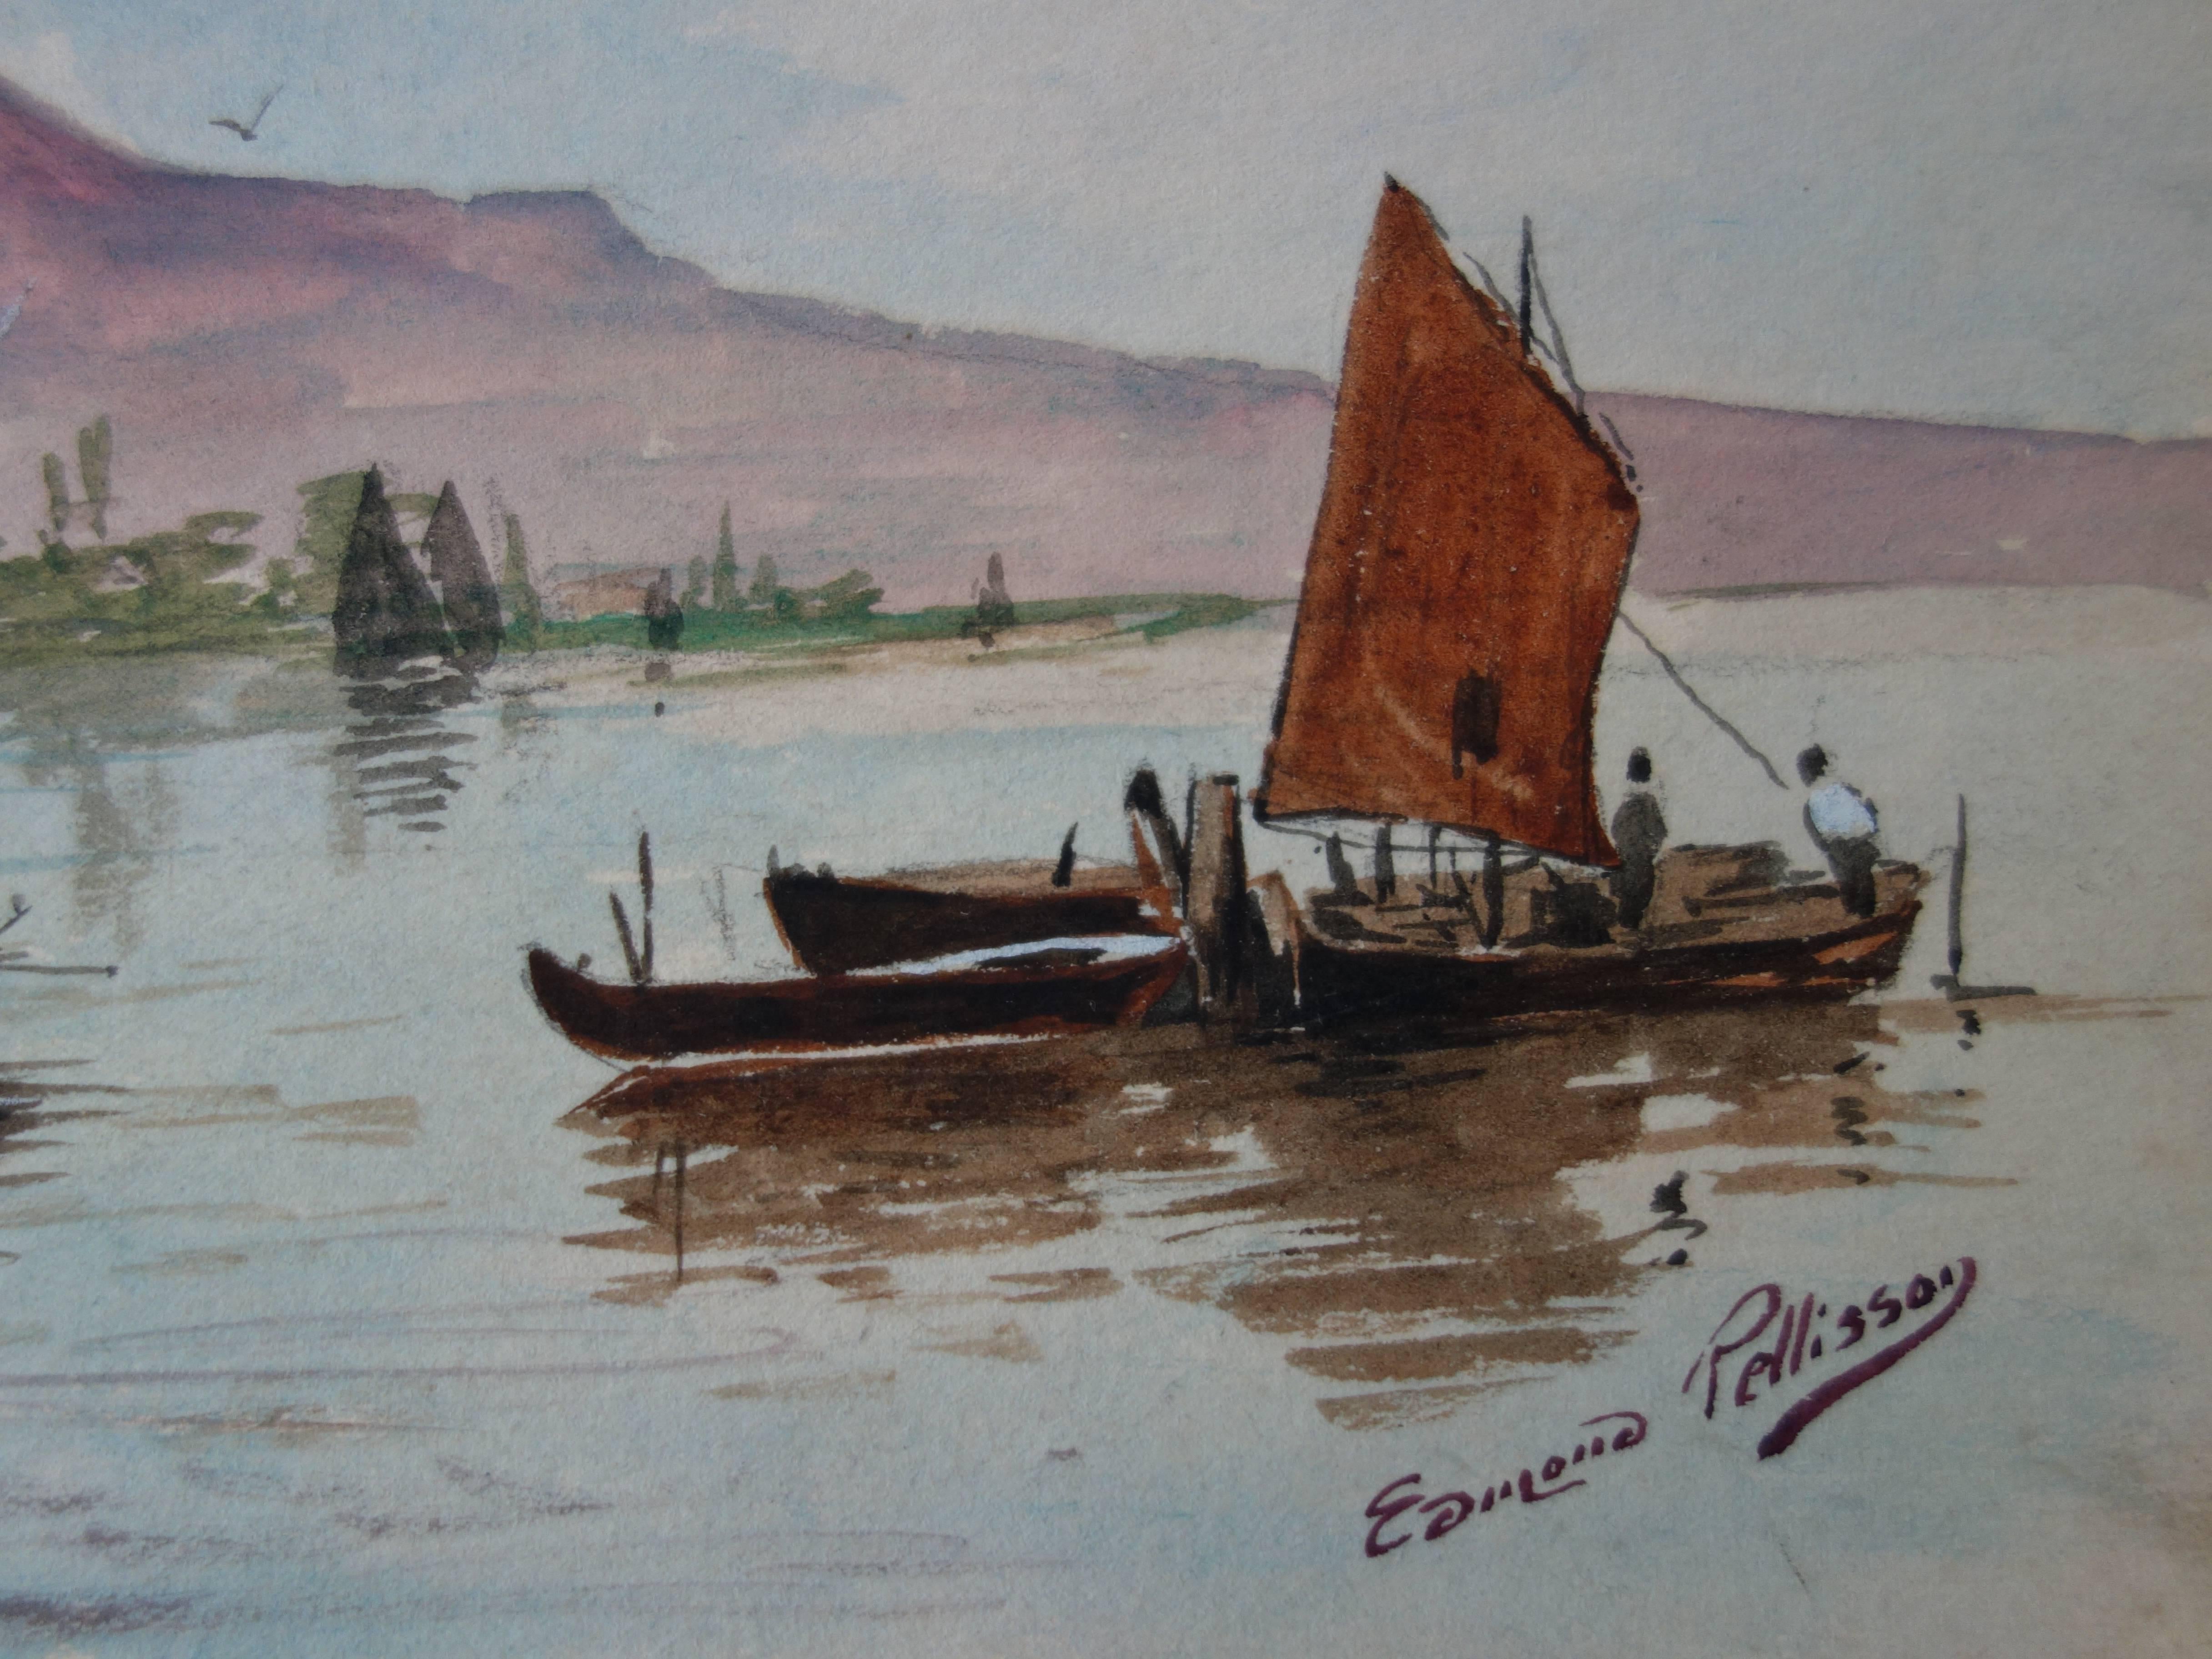 Boats in Morocco - Original handsigned watercolor - c. 1899 - Art by Edmond Pellisson